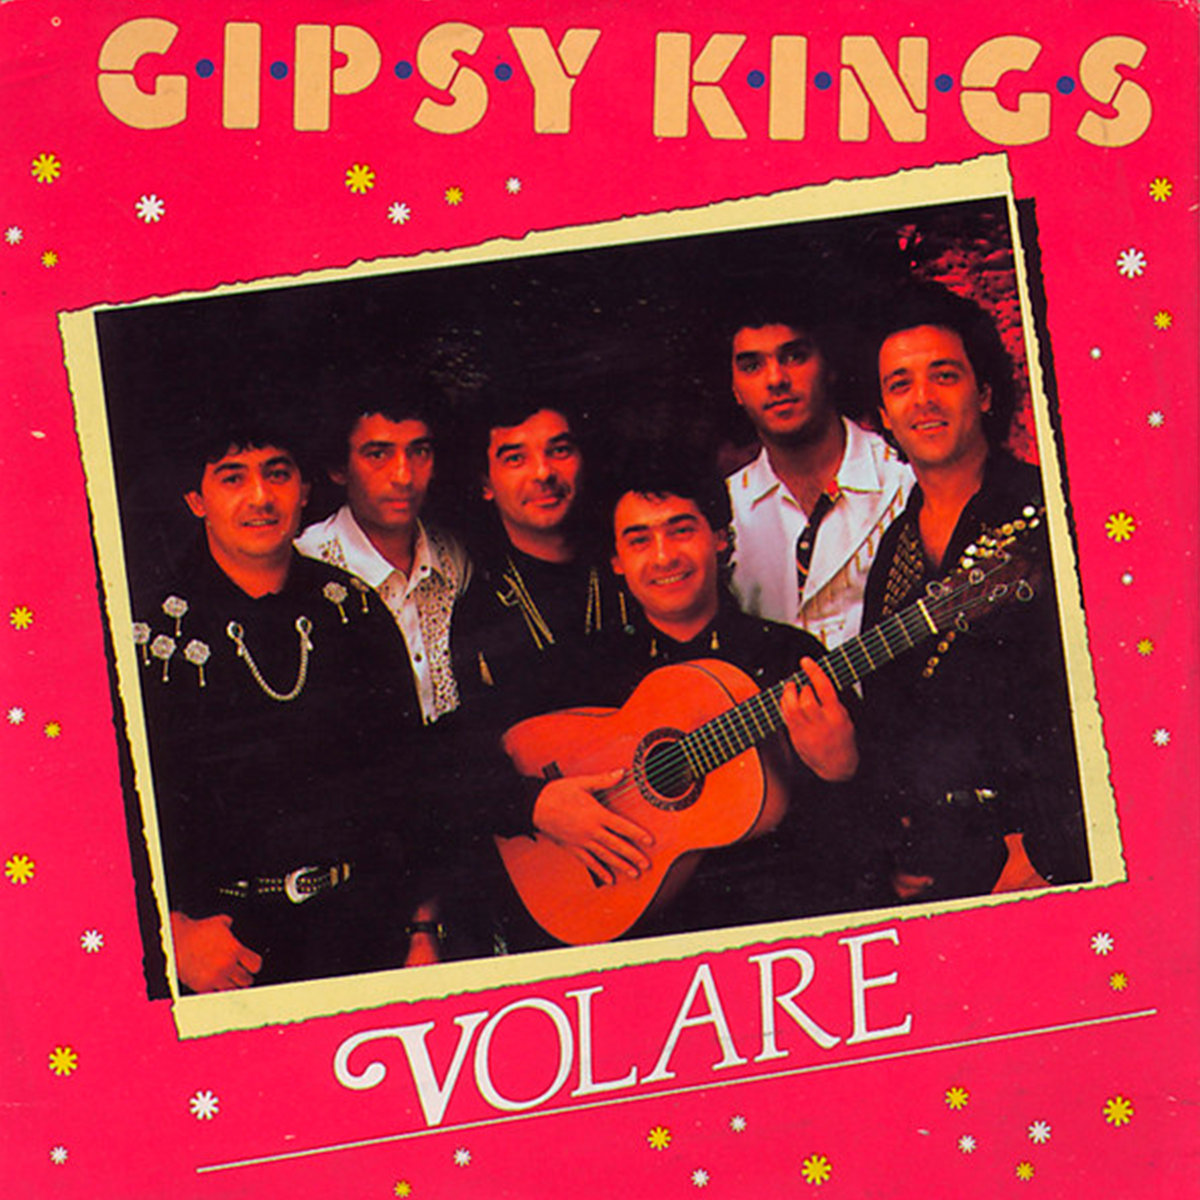 Gipsy Kings 1989. Группа Gipsy Kings. Gipsy Kings (1988) обложка. Gipsy Kings обложка. Gipsy kings volare